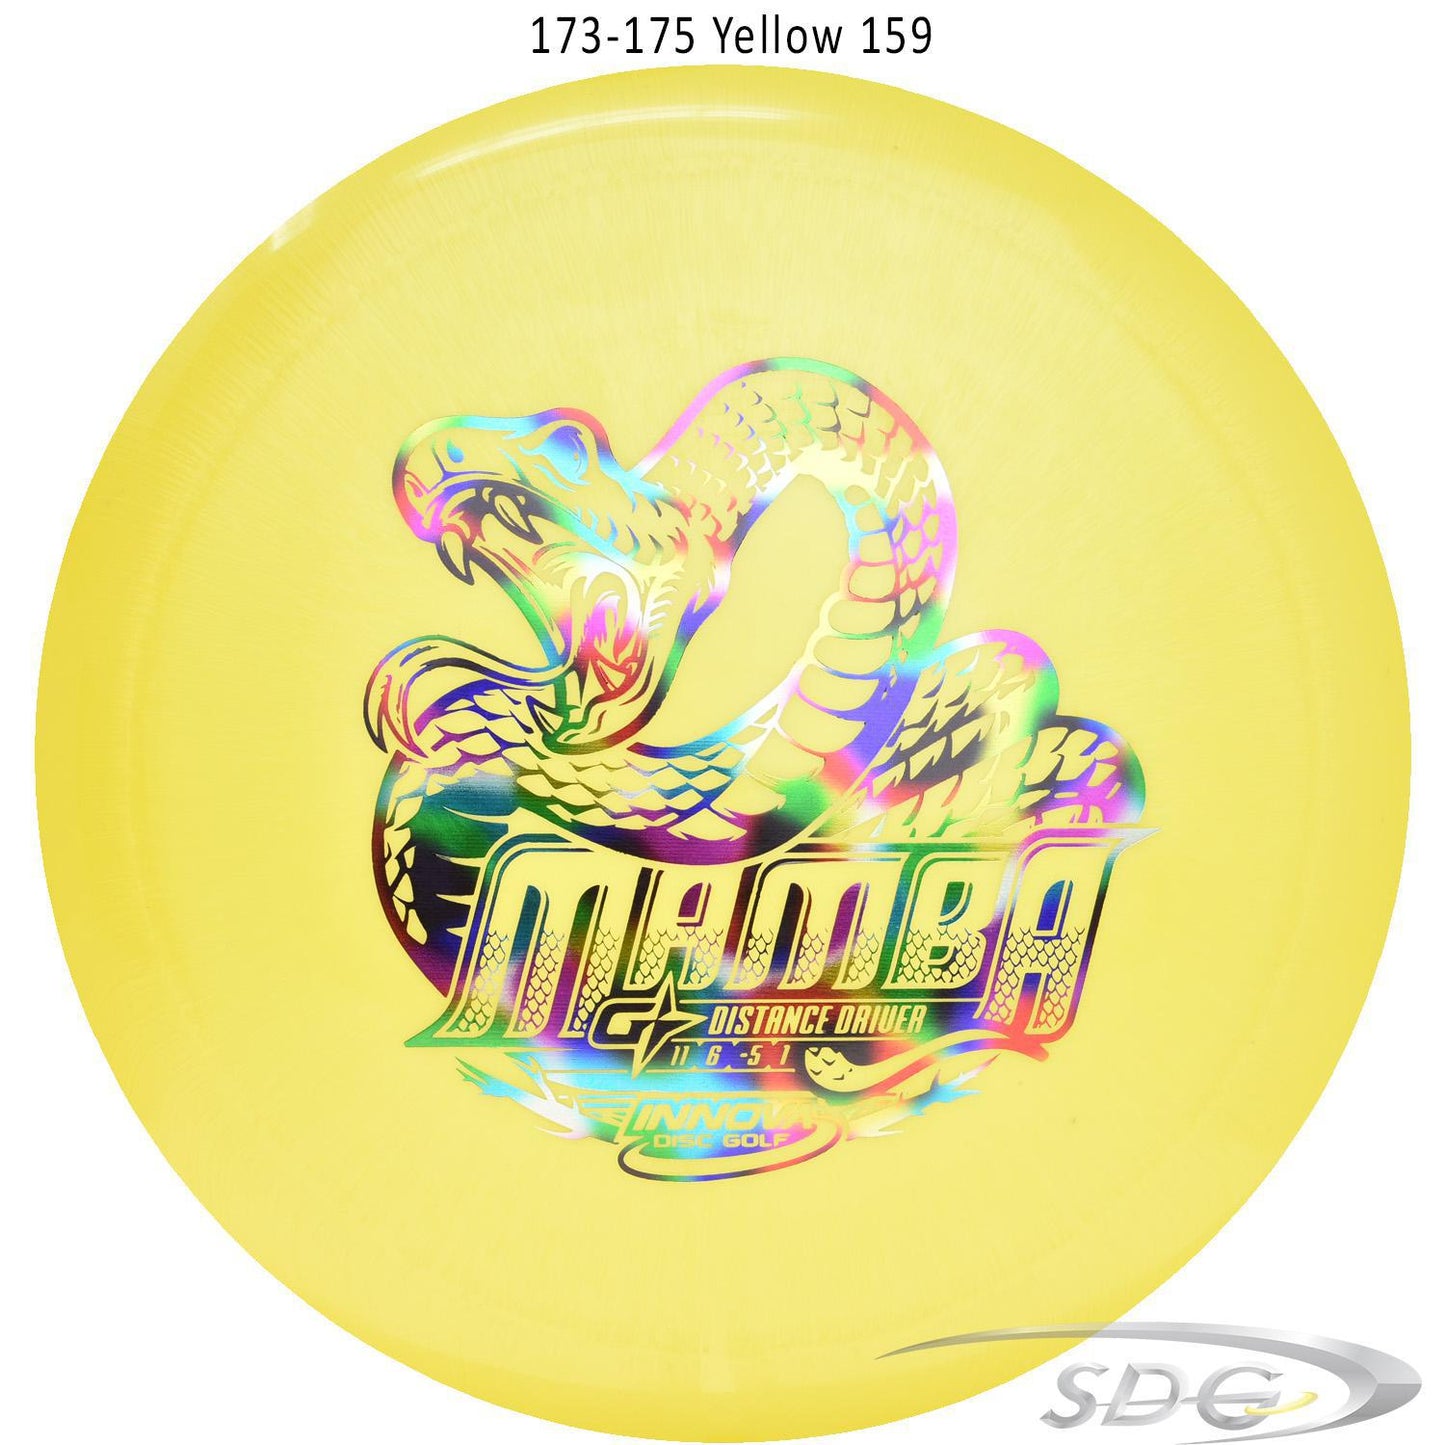 innova-gstar-mamba-disc-golf-distance-driver-175-173-weights 173-175 Yellow 159 